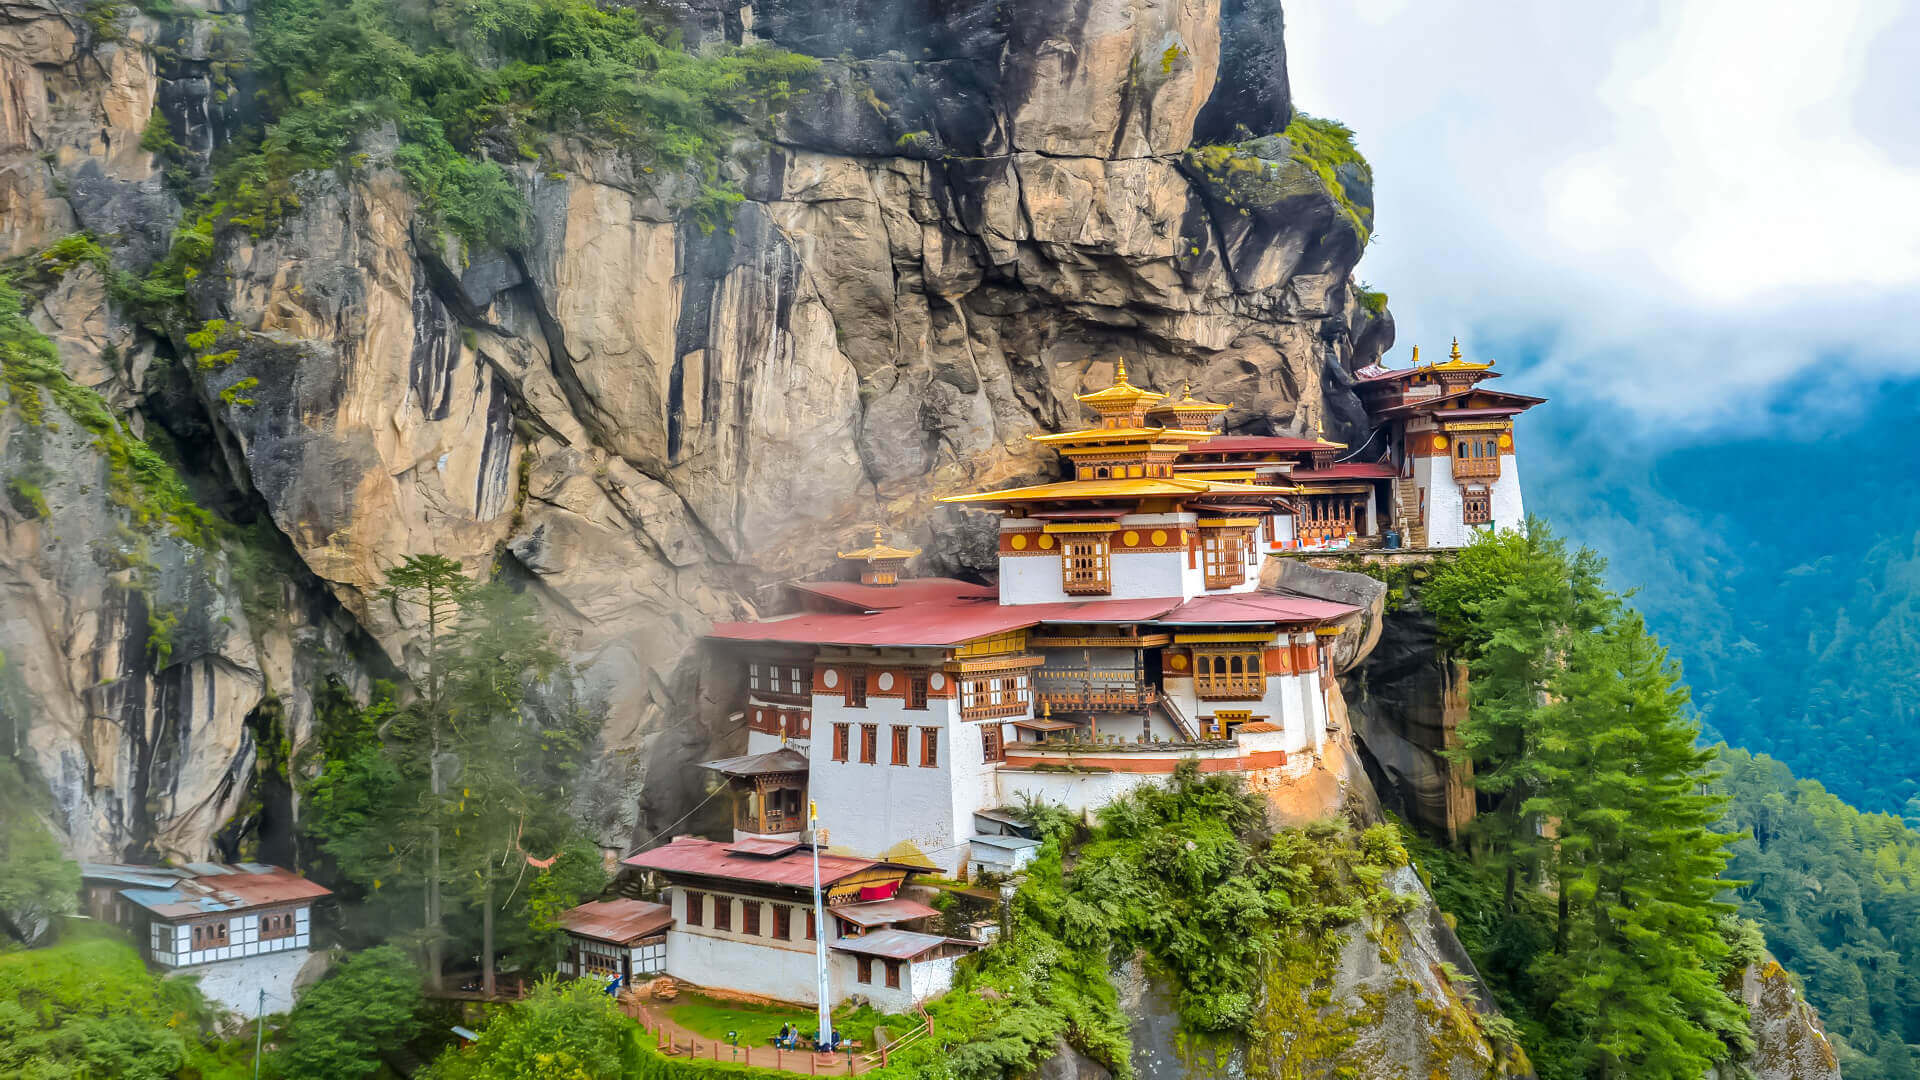 Bhutan travel guide - Travel S helper